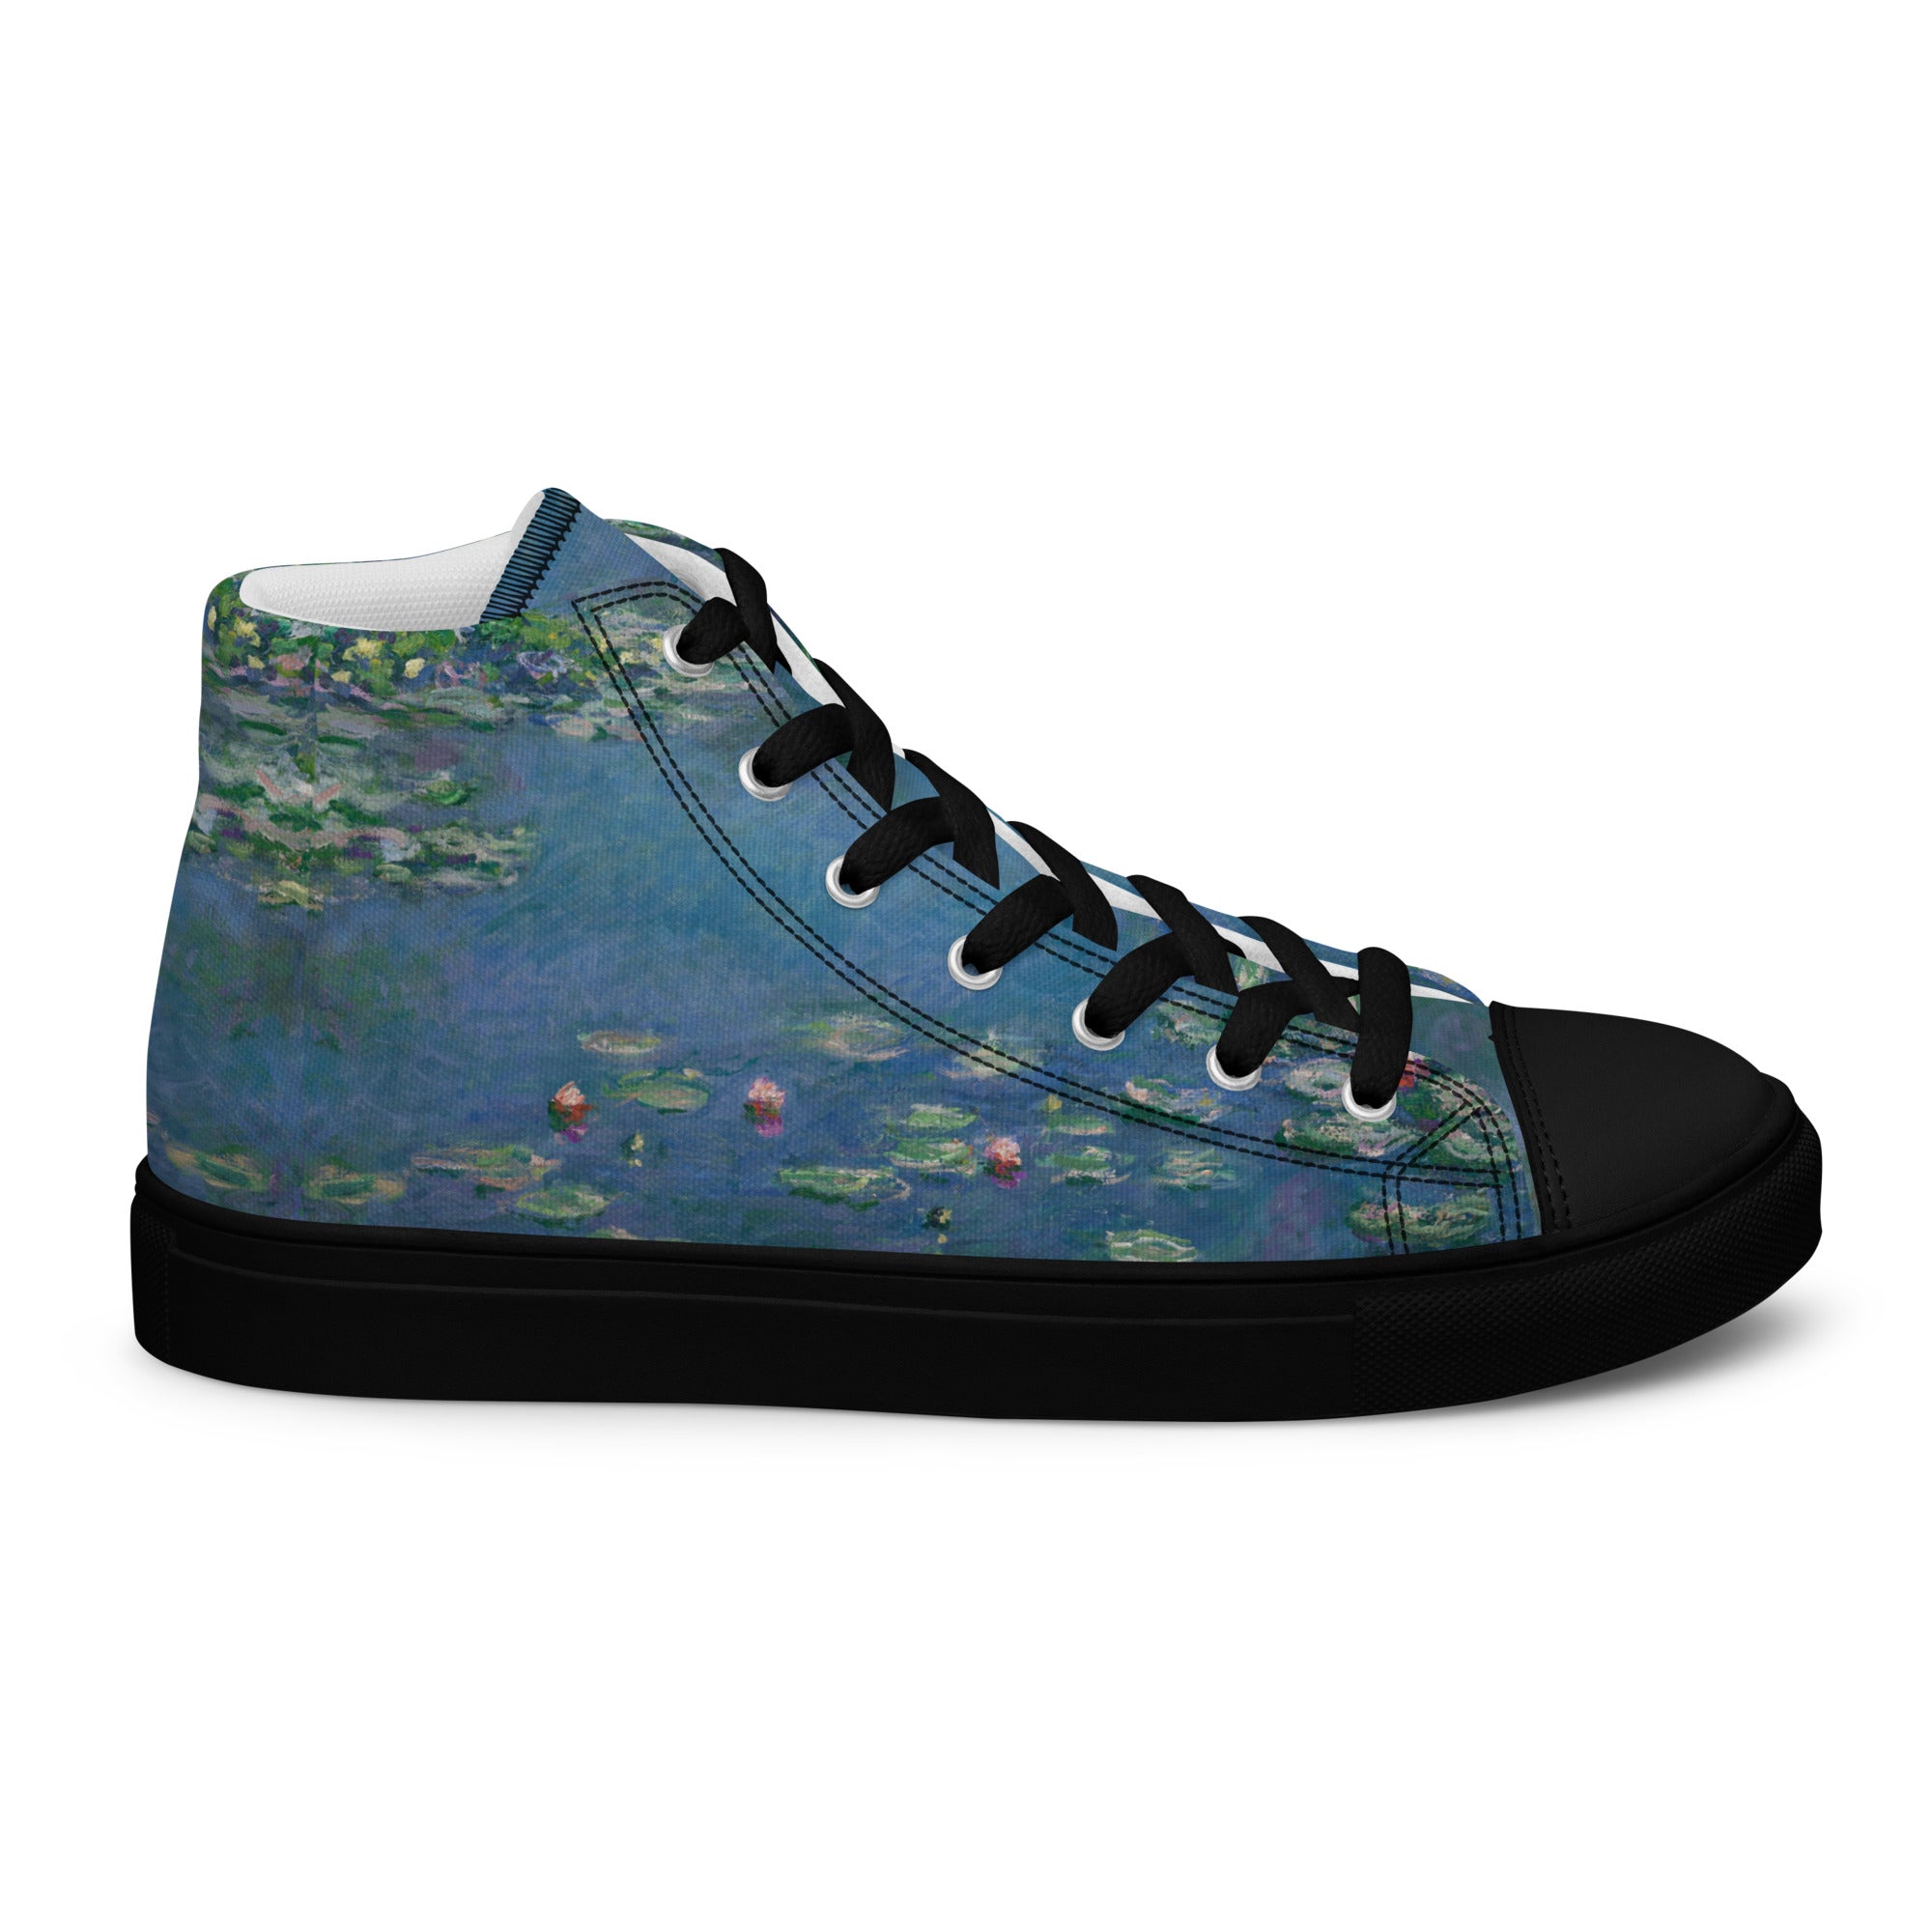 Claude Monet 'Water Lilies' High Top Shoes | Premium Art High Top Sneakers for Men